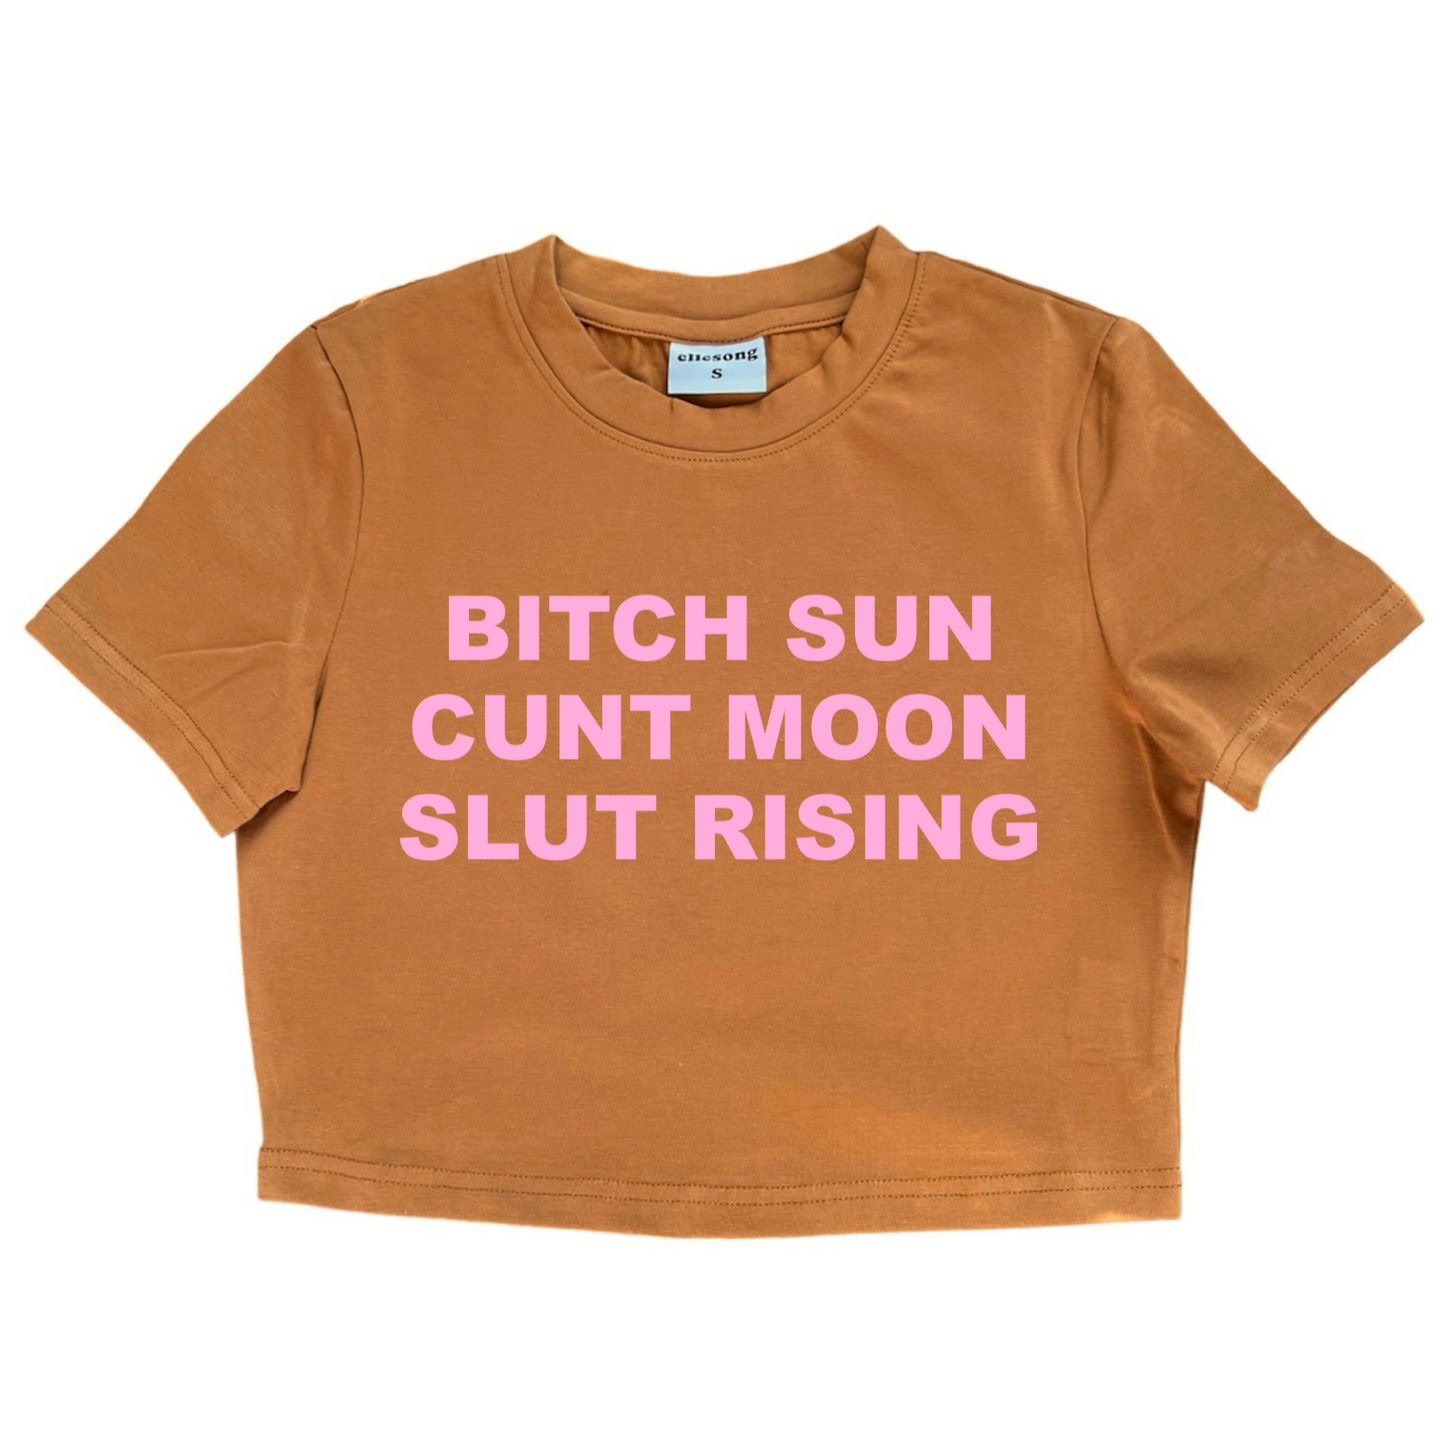 Bitch Sun Cunt Moon Slut Rising Black Baby Tee